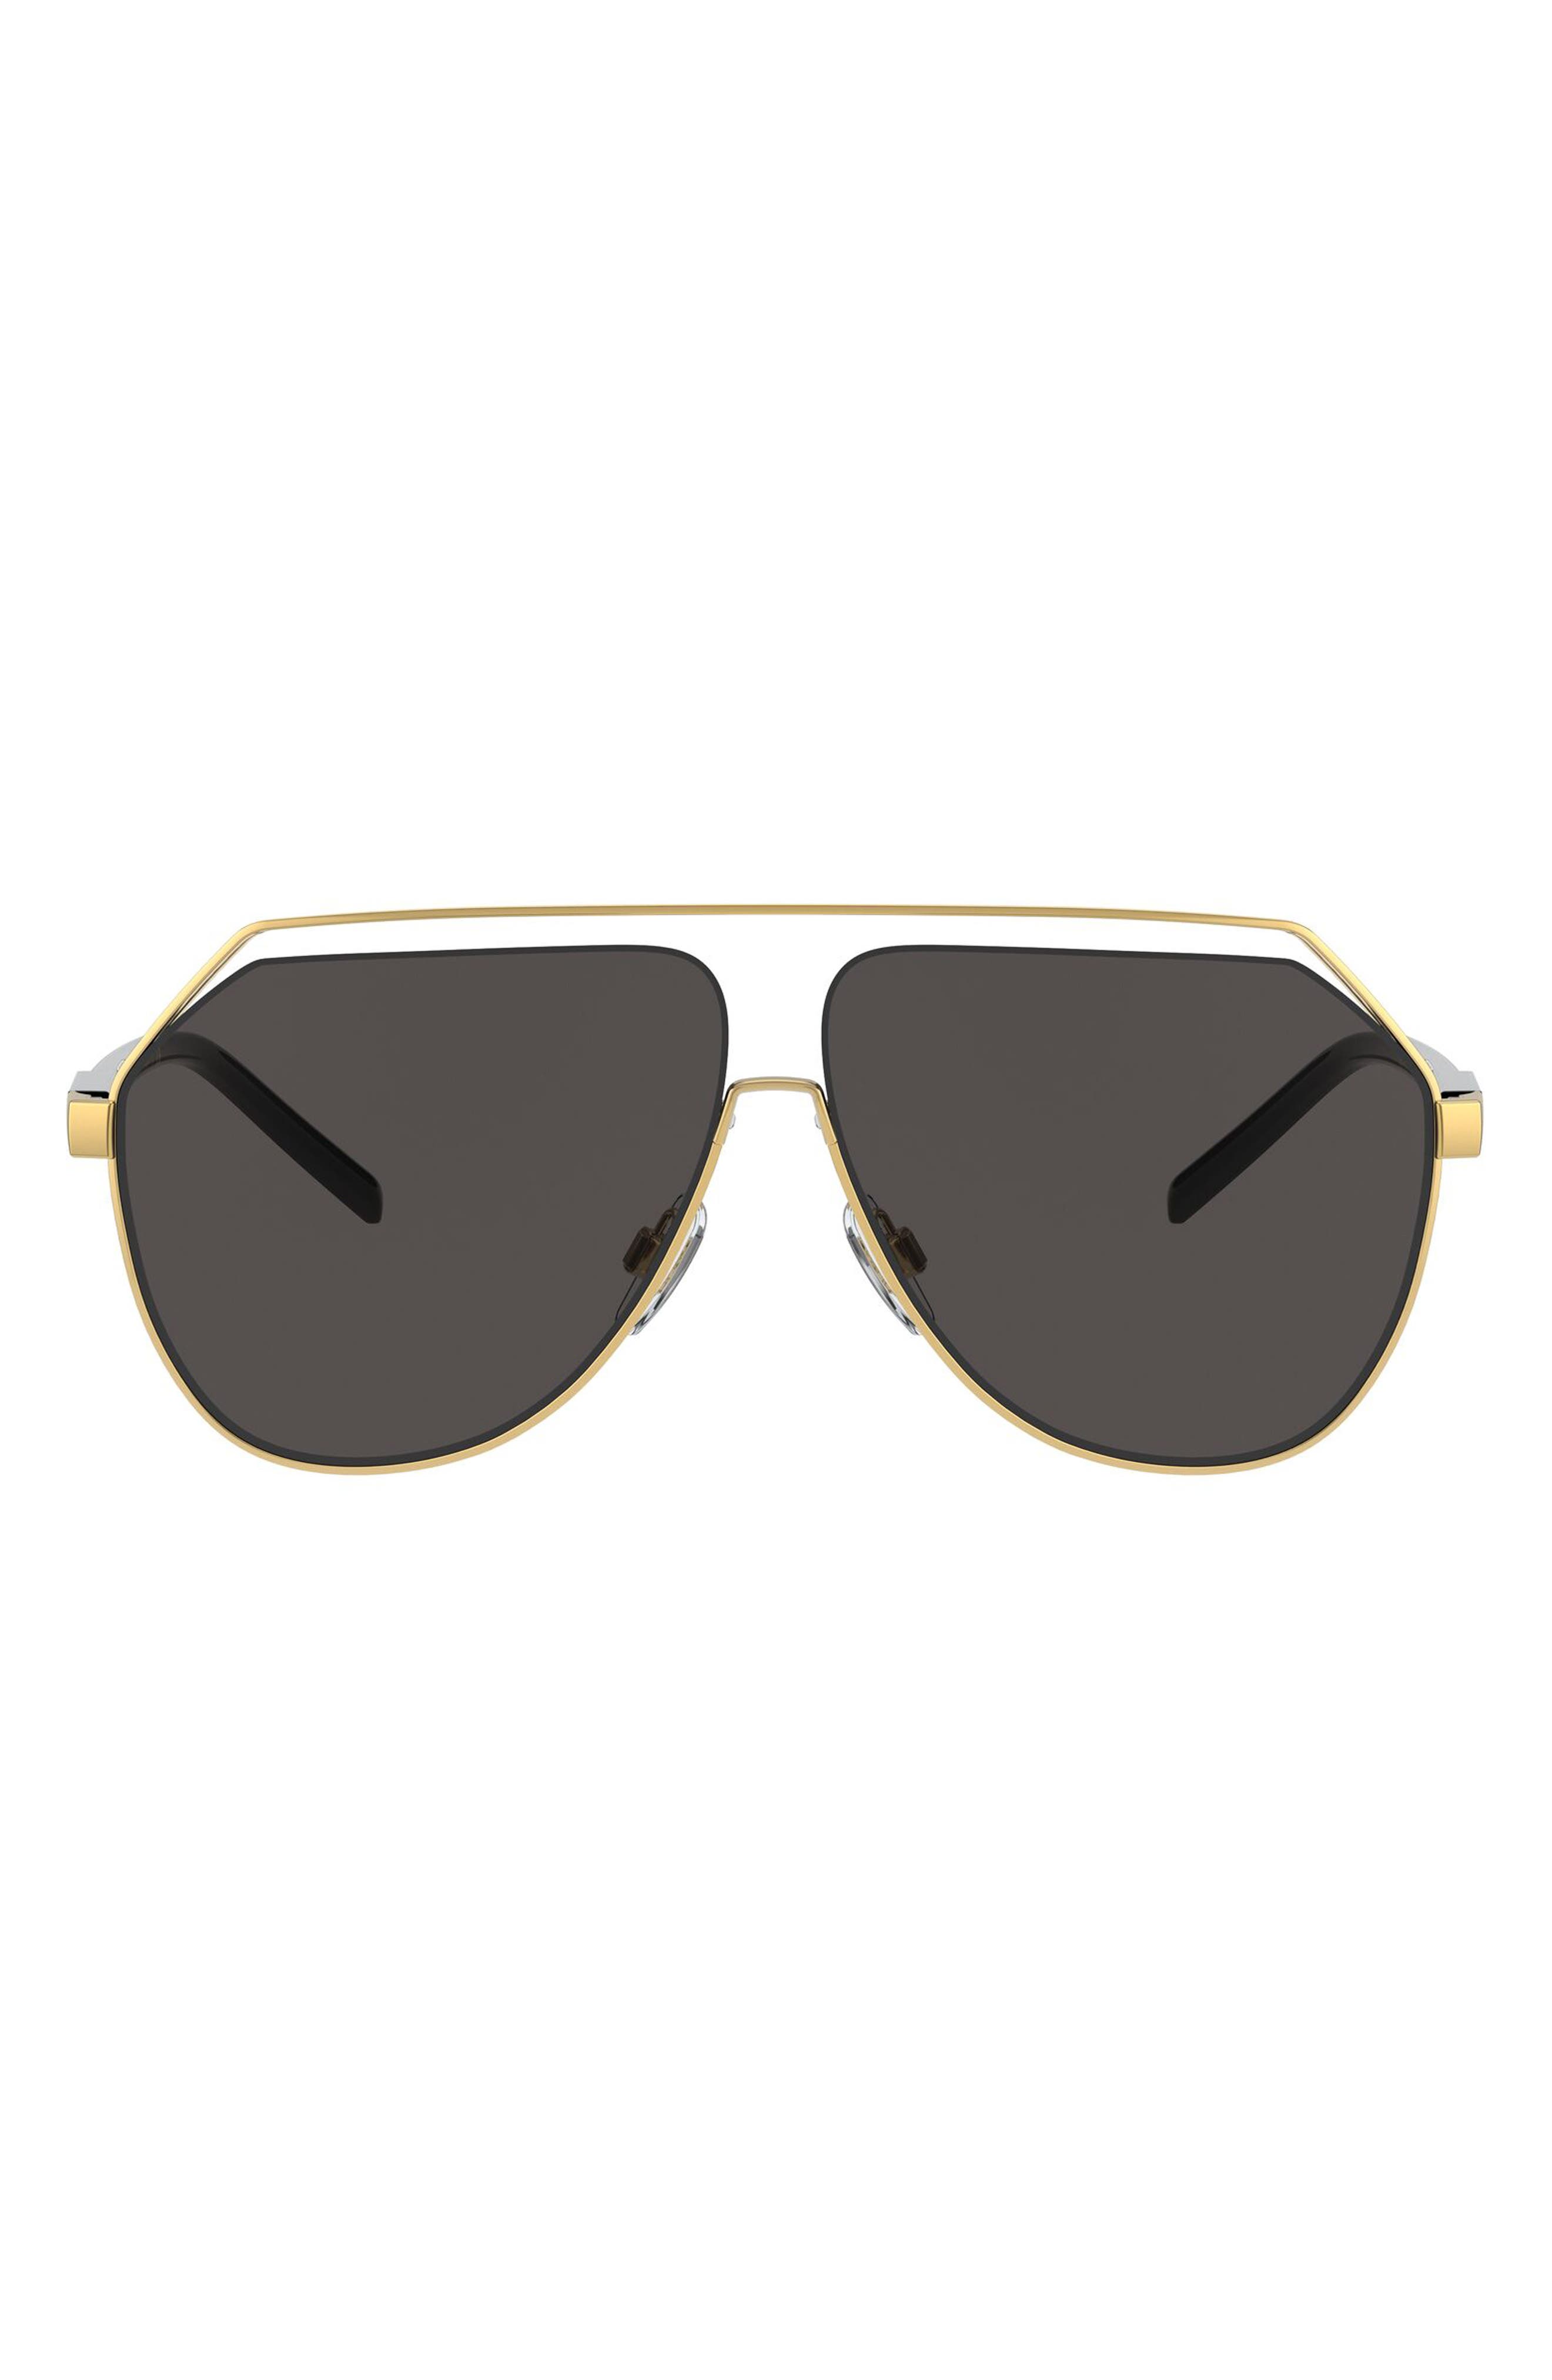 Dolce & Gabbana Metal Man 35mm Aviator Sunglasses in Gold at Nordstrom